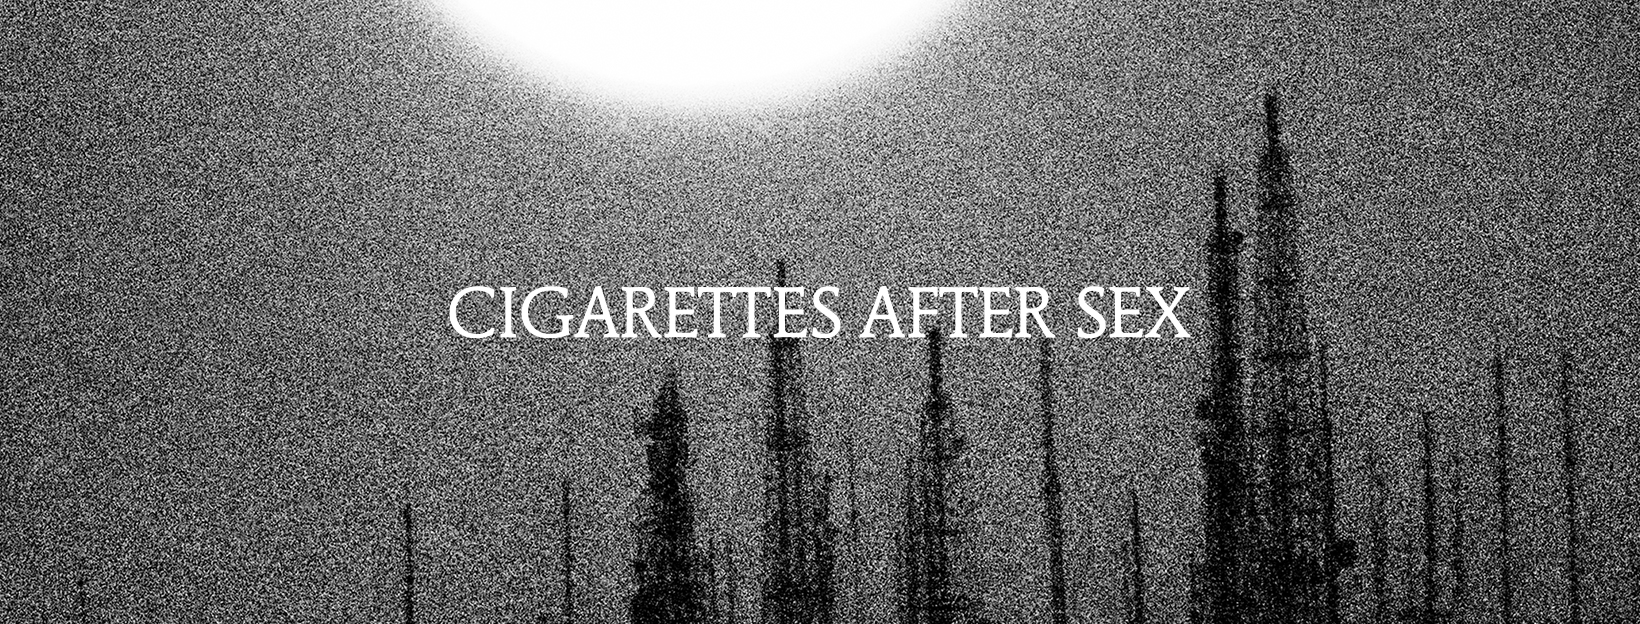 Cigarettes After Sex A Pocos Días Llegar A Gdl 1566